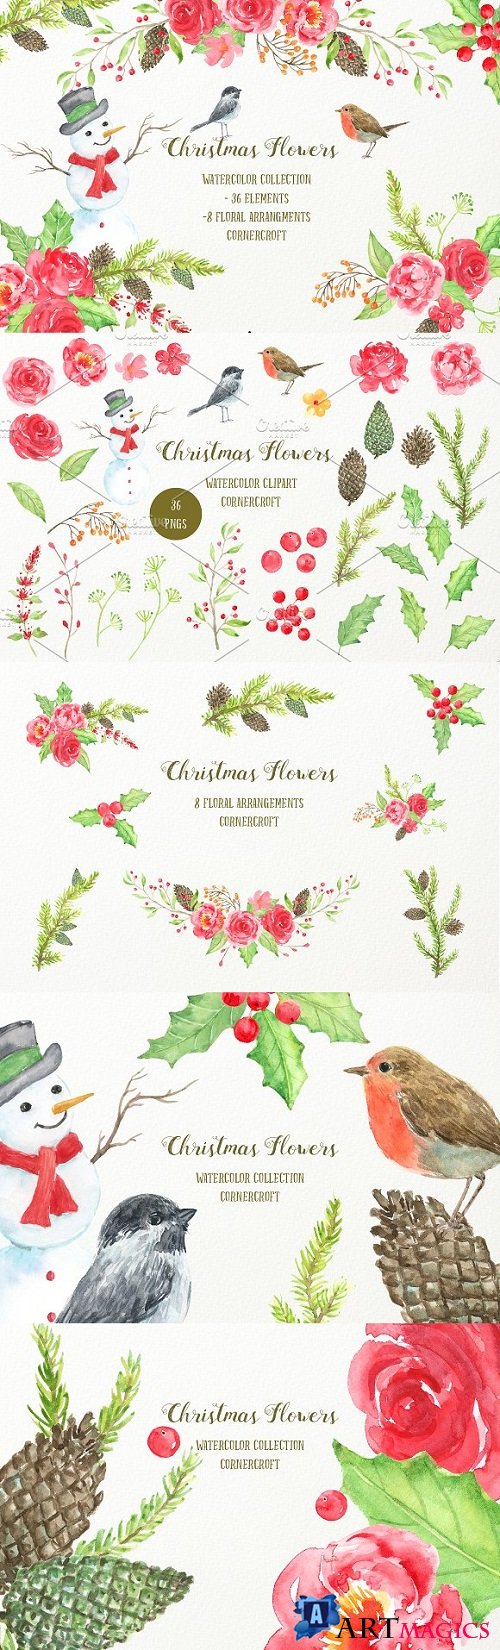 Watercolor Christmas Flowers - 2011791